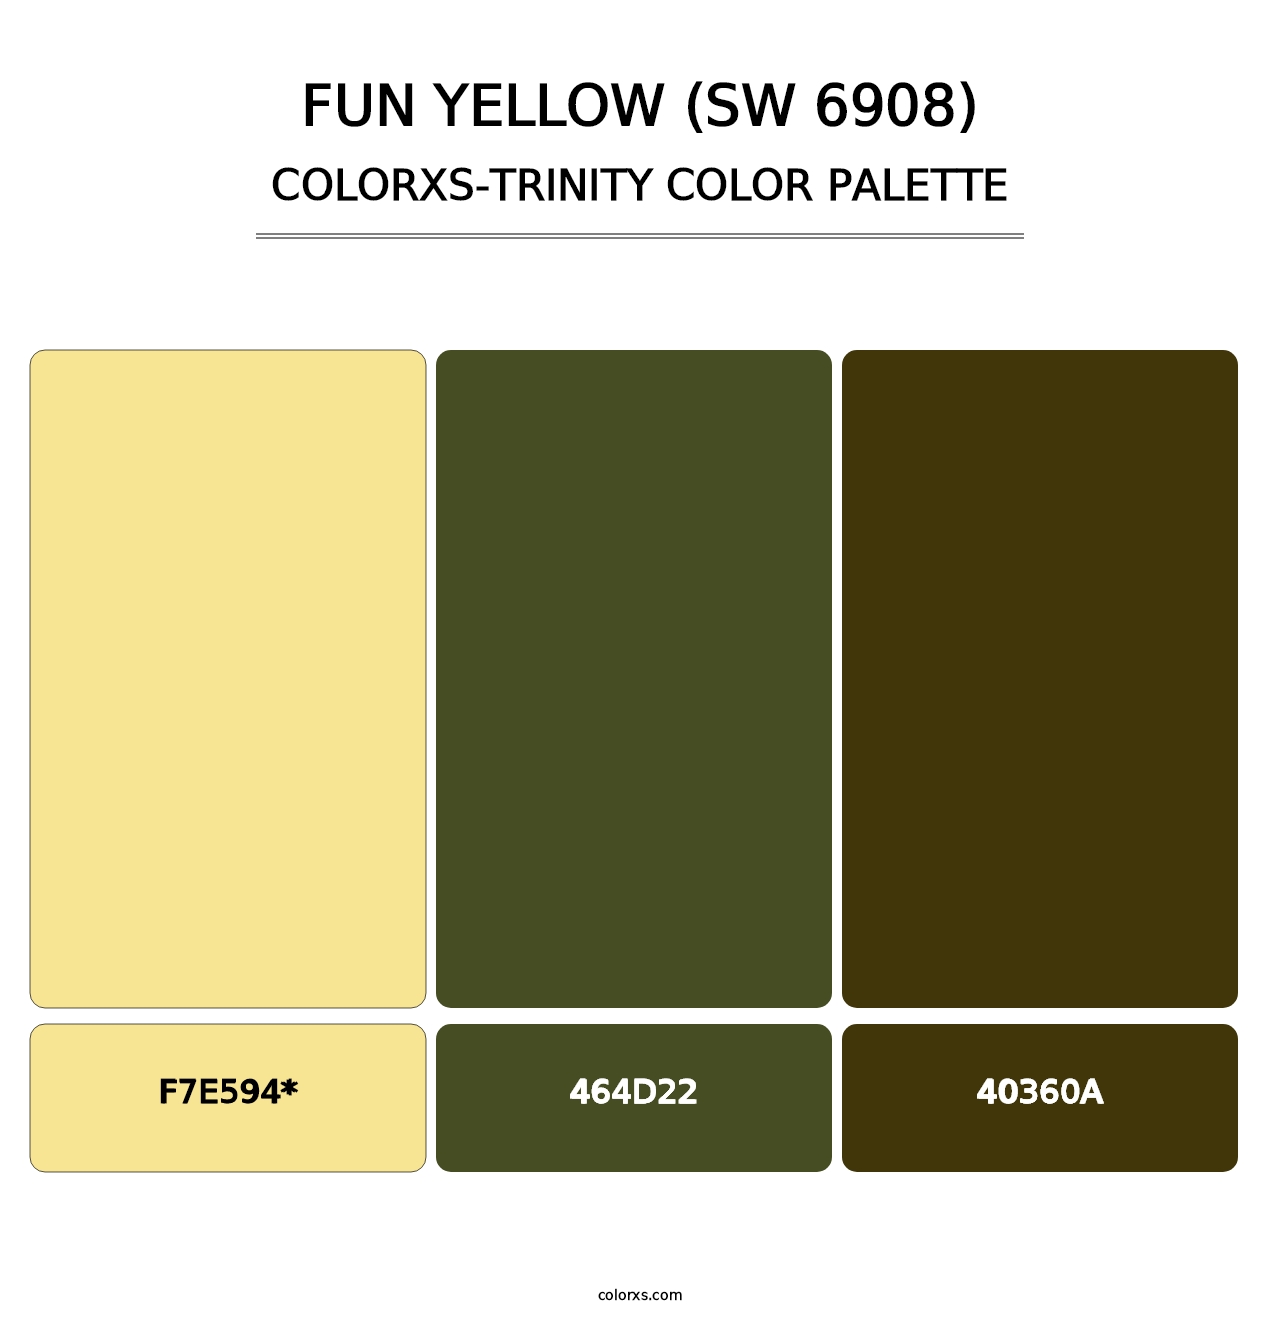 Fun Yellow (SW 6908) - Colorxs Trinity Palette